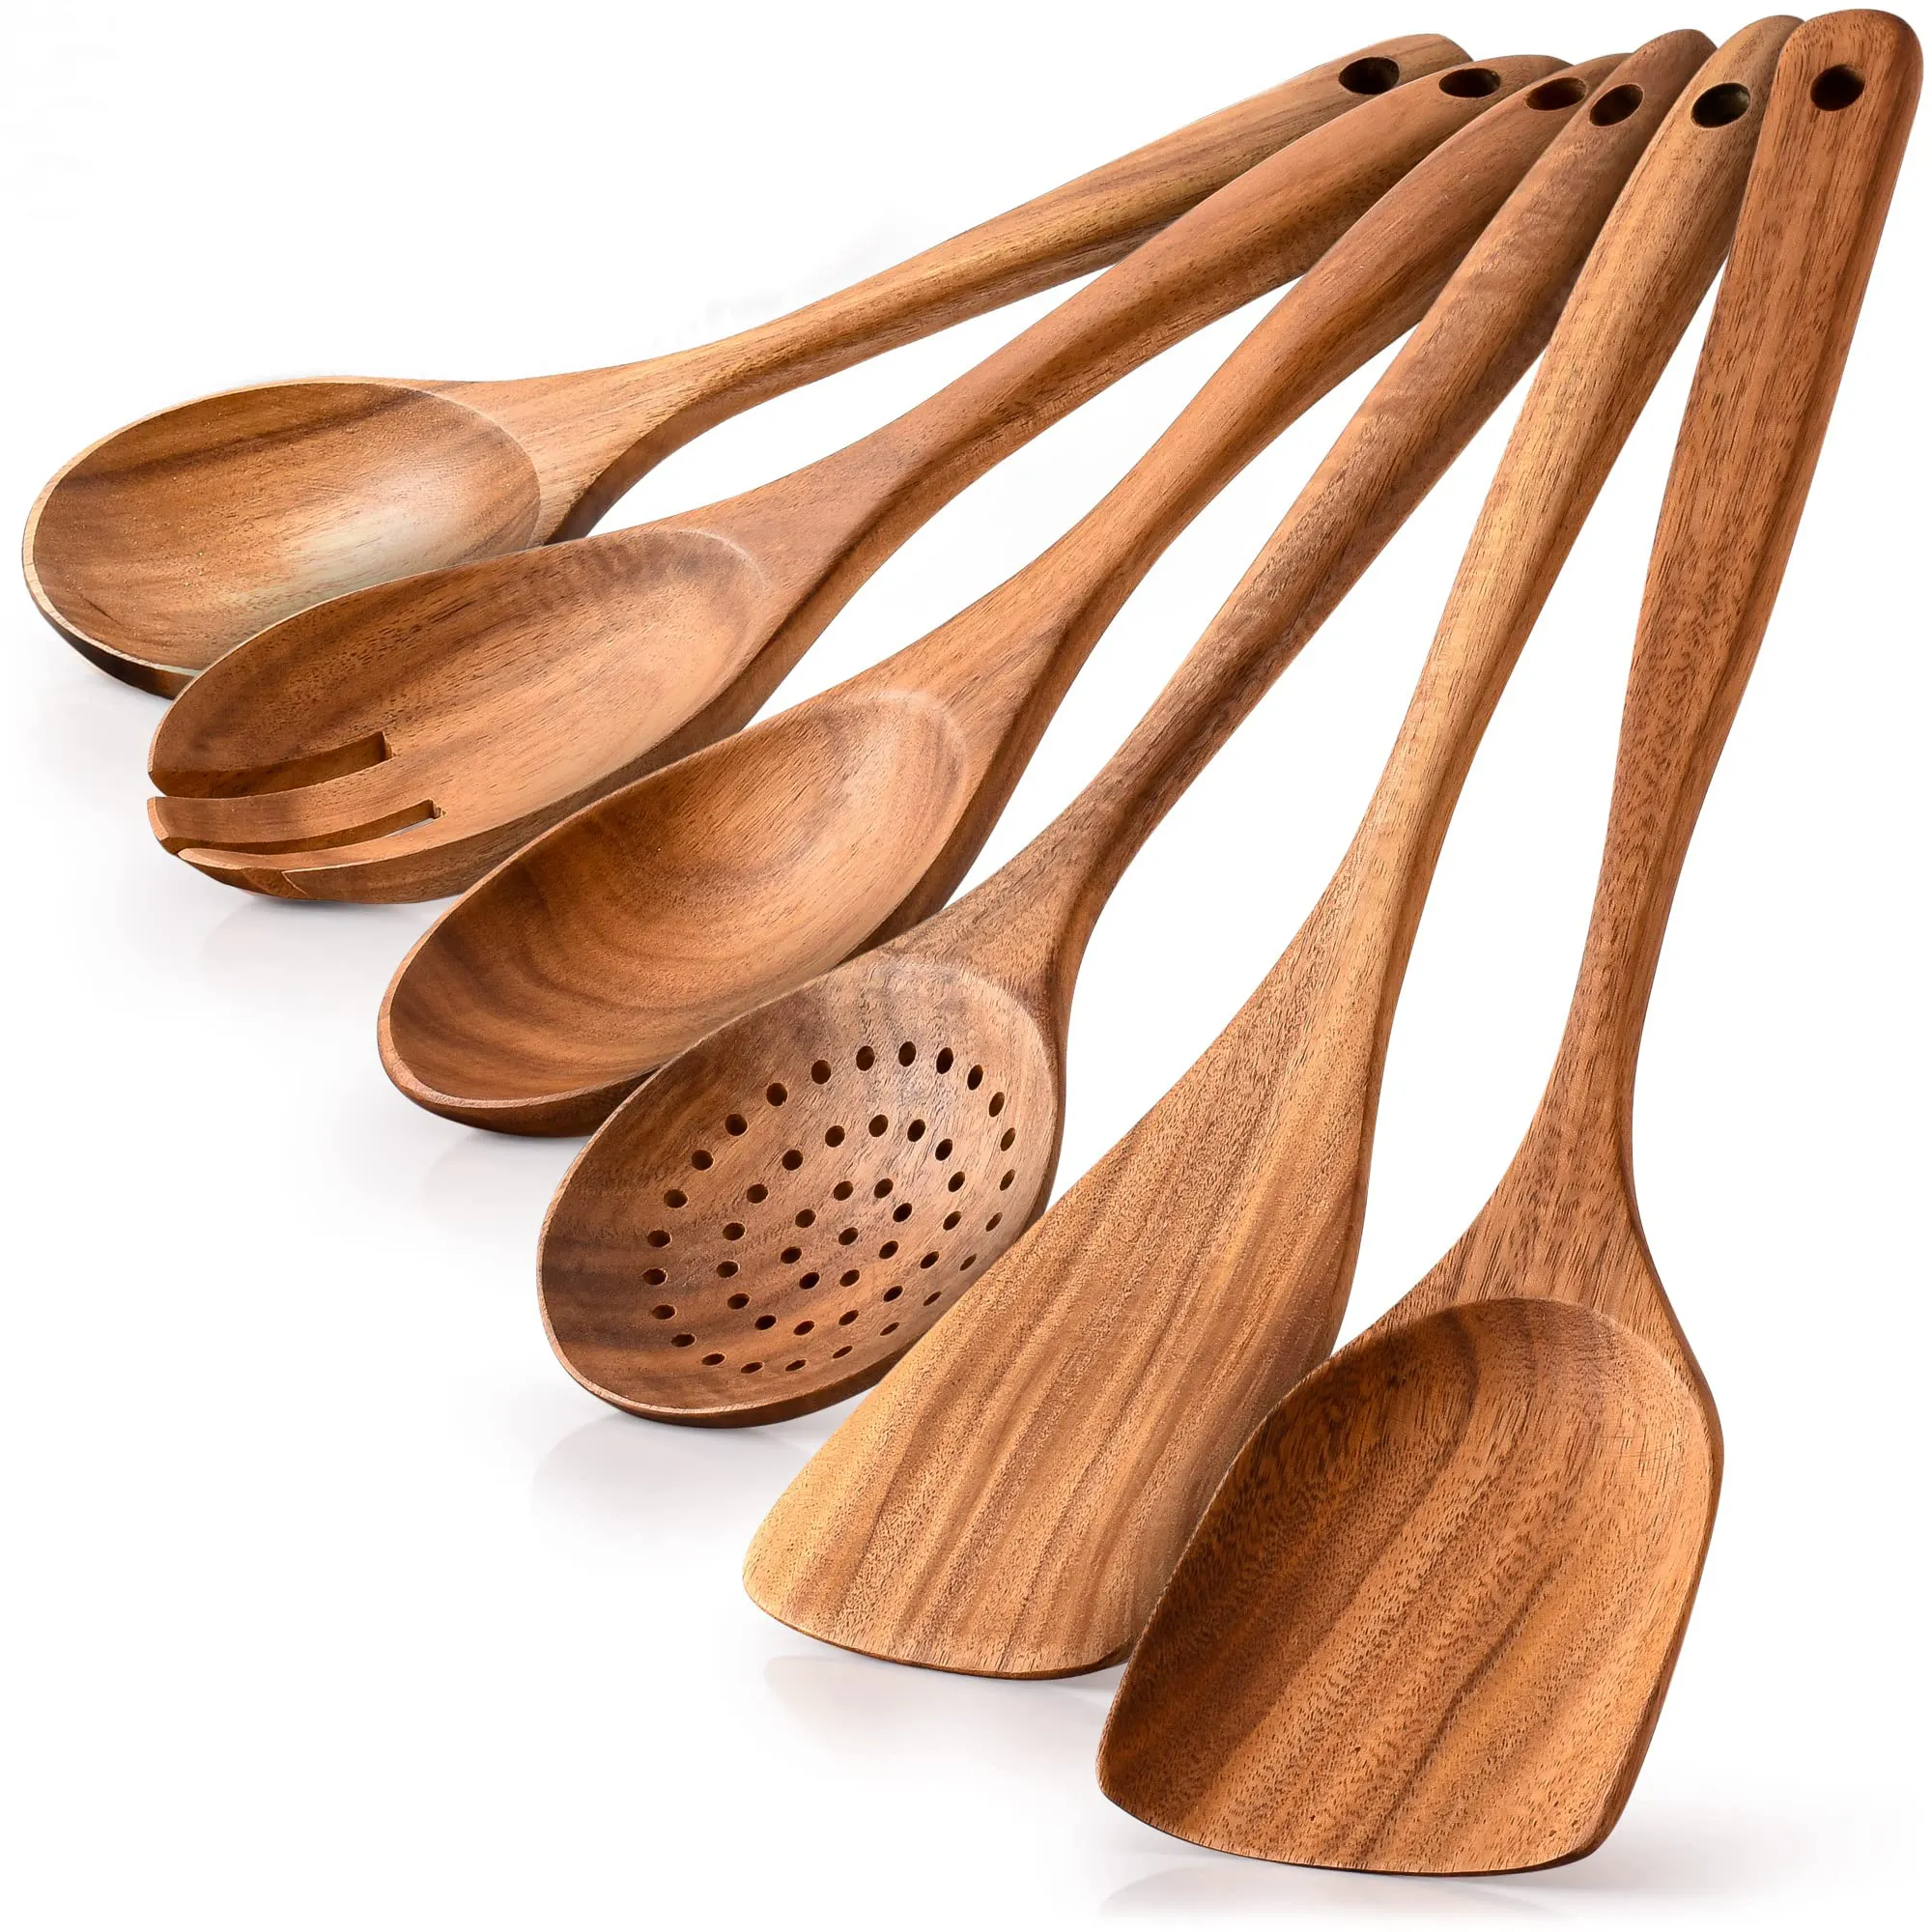 Cucharas de madera para cocinar, juego de utensilios de cocina antiadherentes, cucharas de madera Juego de utensilios de cocina Utensilios de madera de teca natural para cocinar